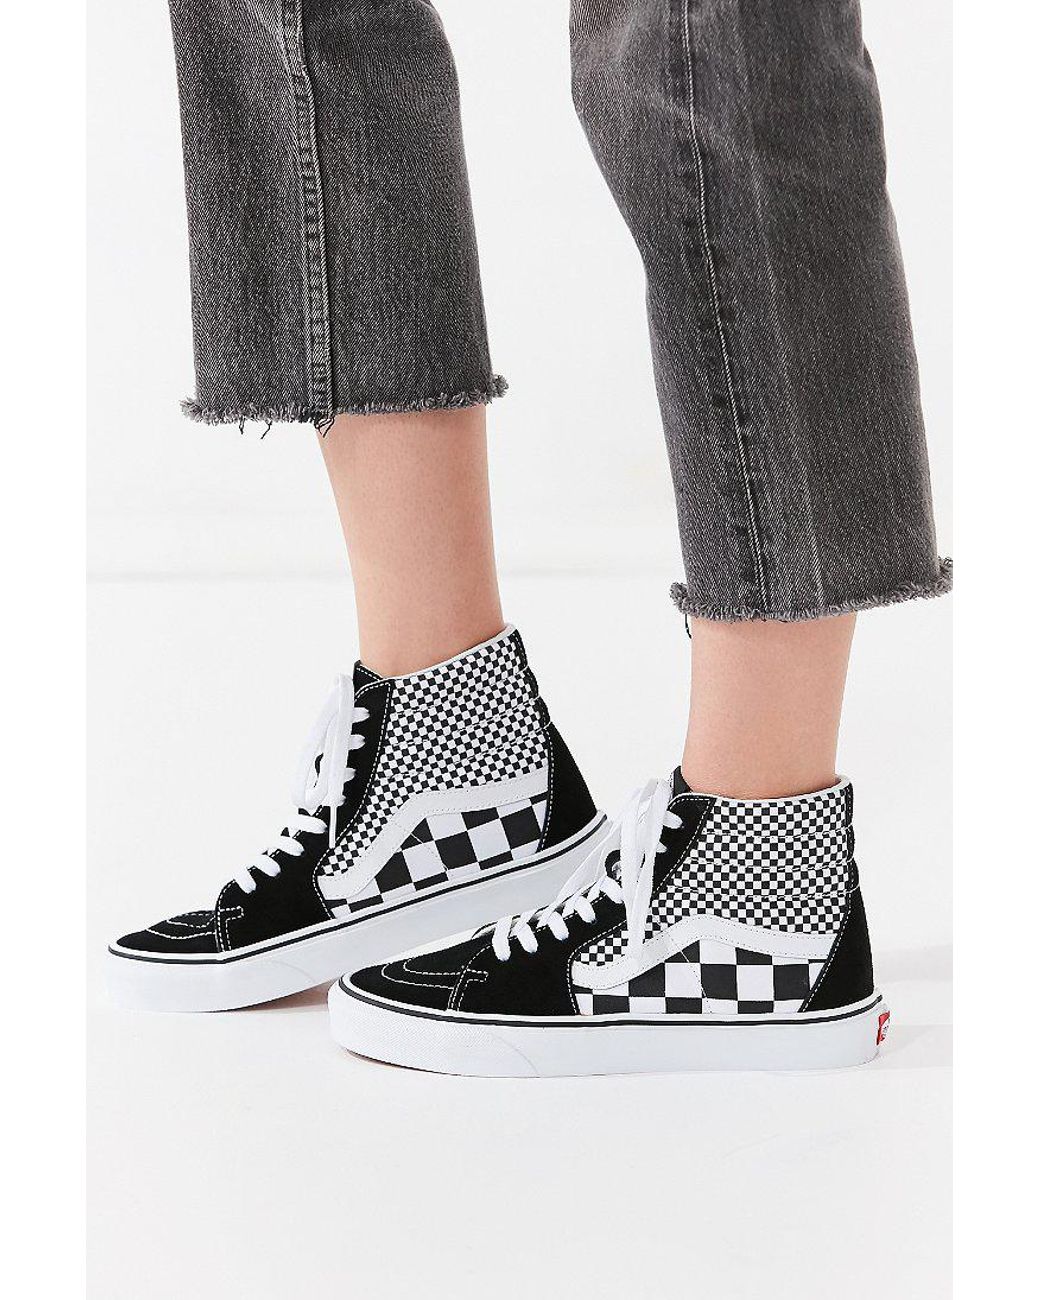 Vans Canvas Vans Mix Checkerboard Sk8-hi Sneaker in Black + White (Black) |  Lyst